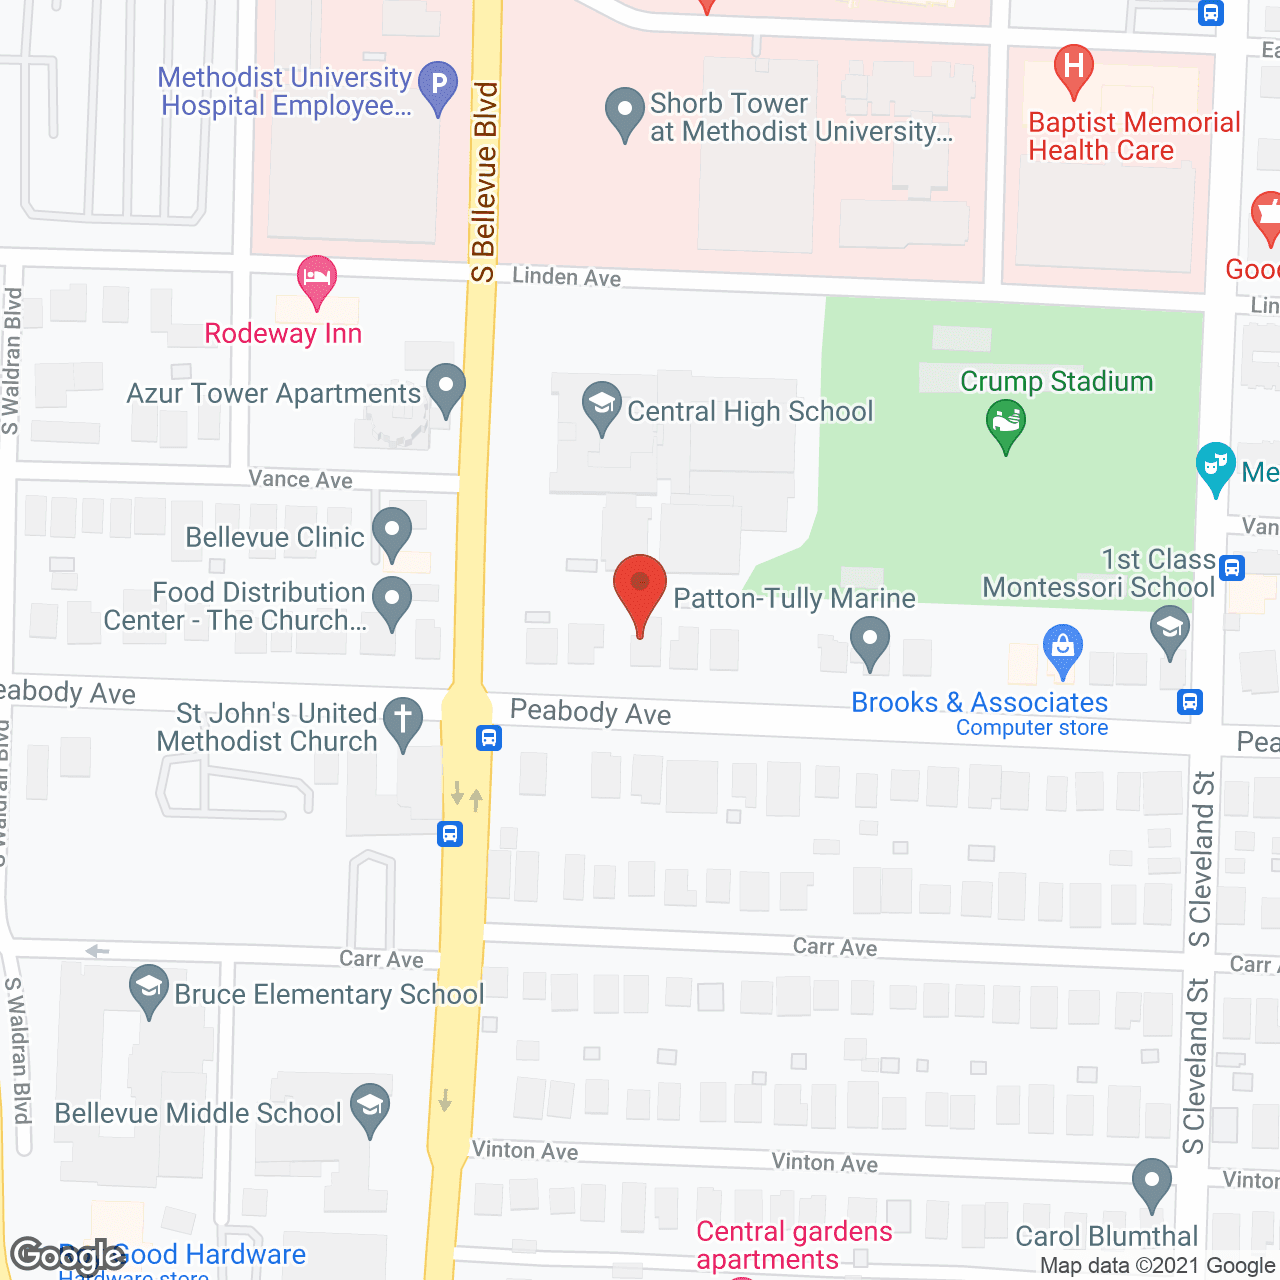 Visiting Angels - Memphis in google map